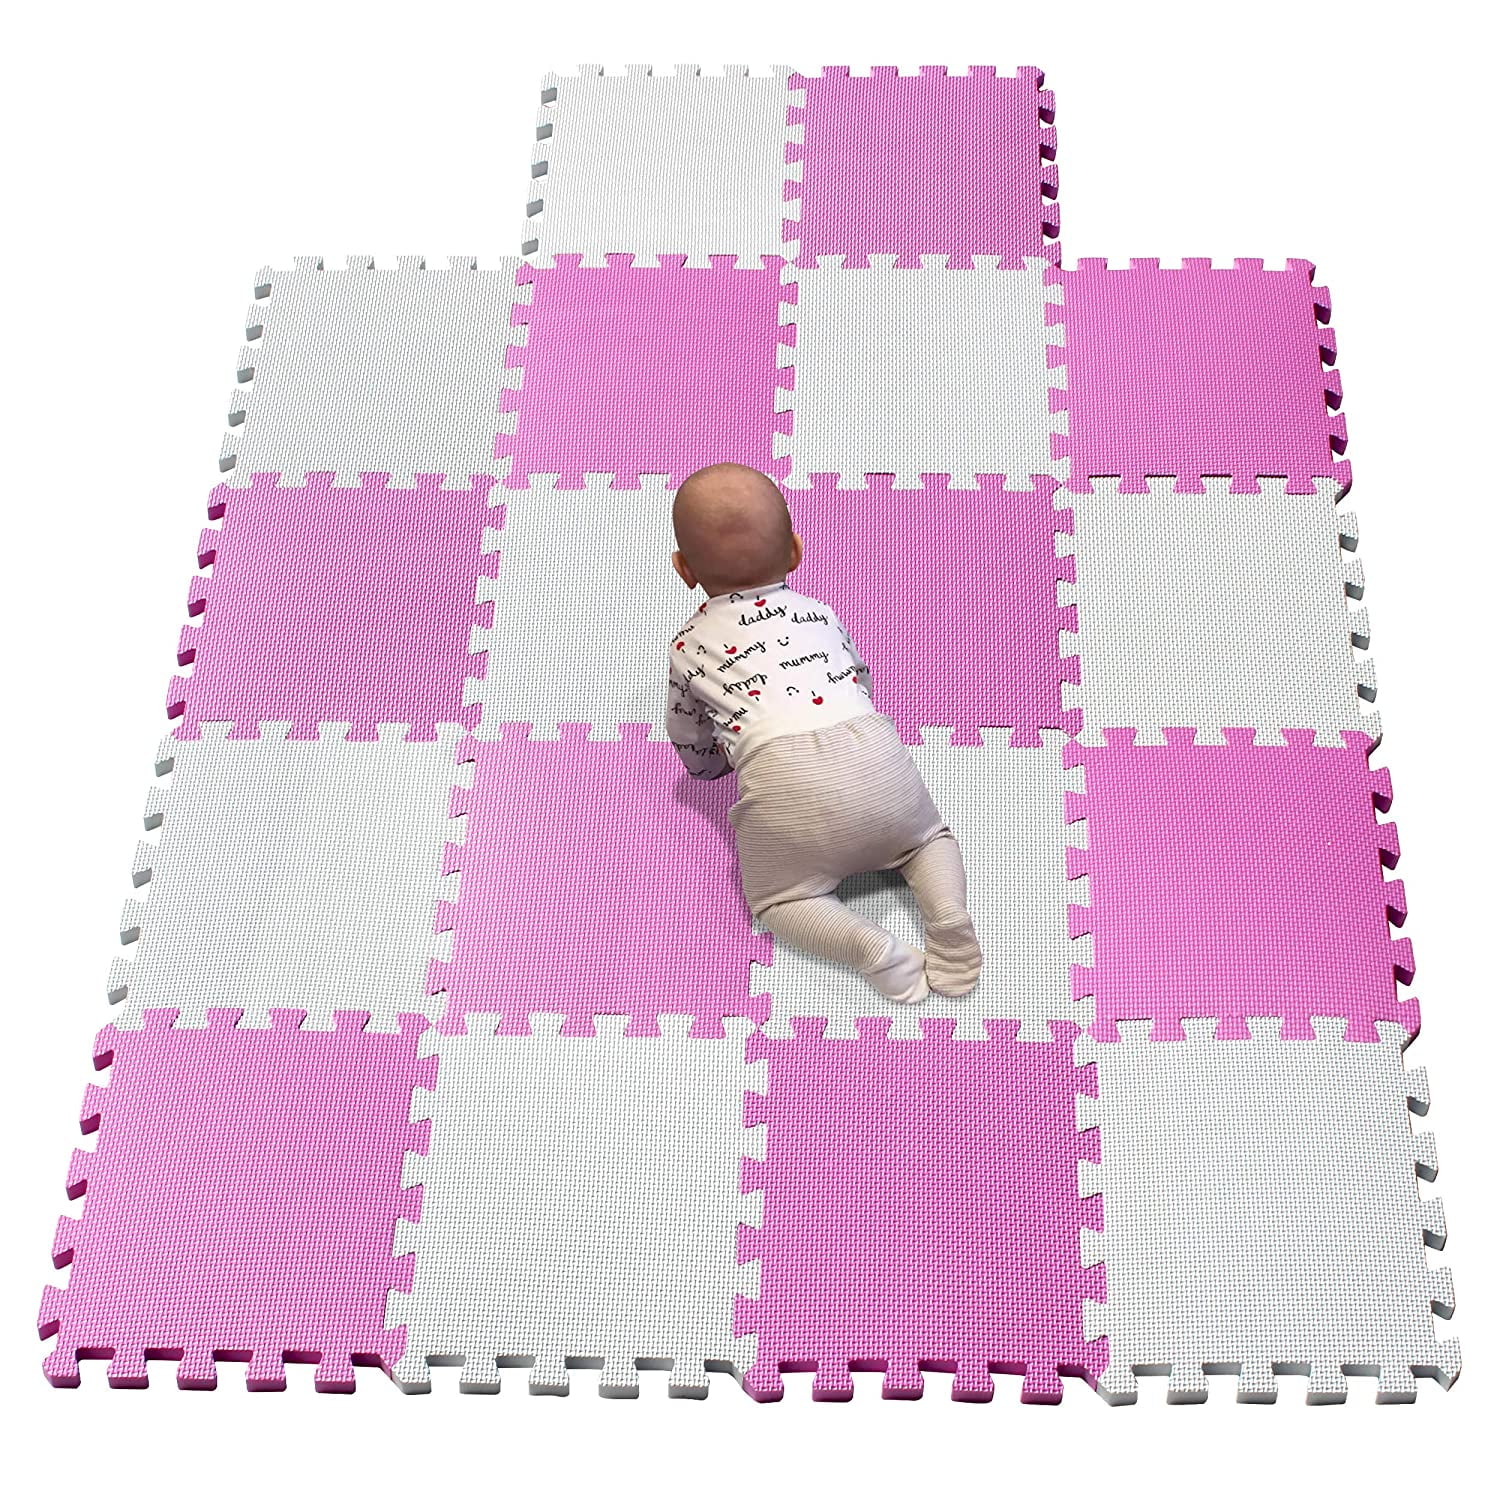 EVA Foam Kids Play Puzzle Mat 30x30 Interlocking Exercise Tiles Floor Non-Toxic